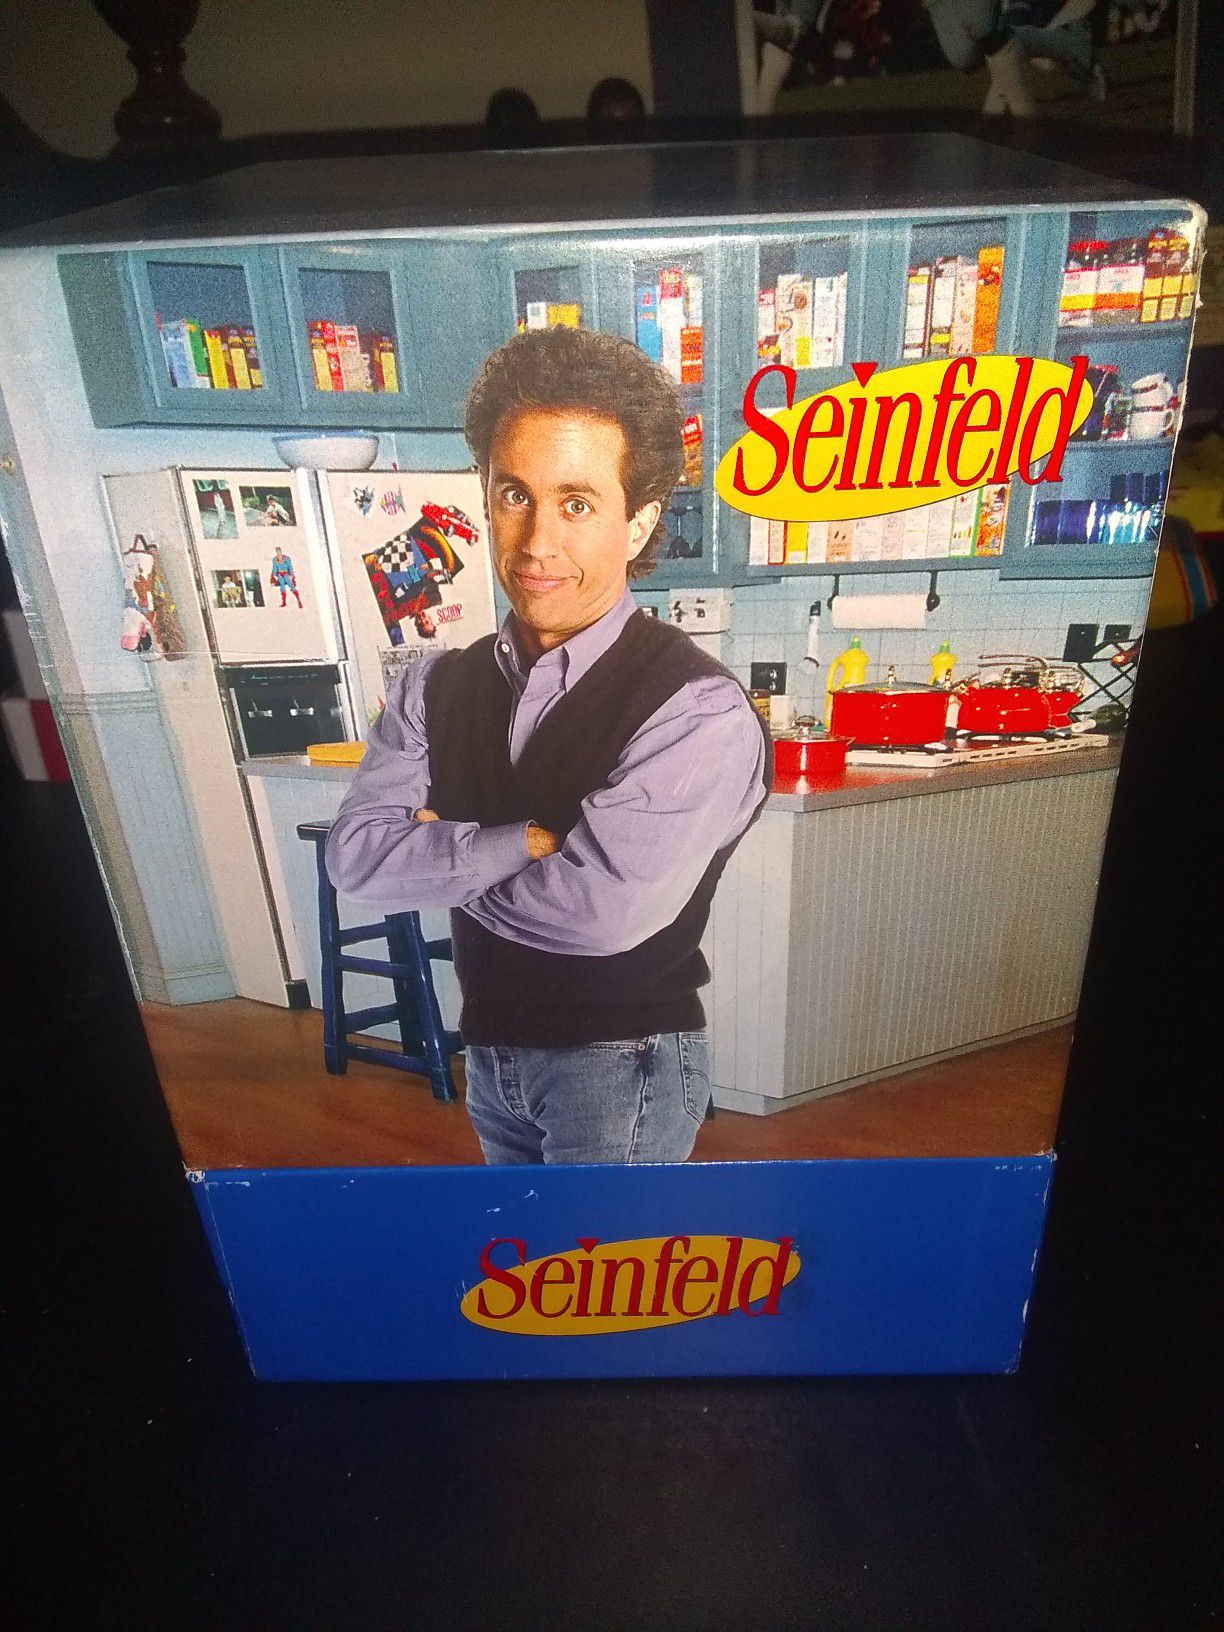 Seinfeld Deluxe Dvd Box Set with Bonuses